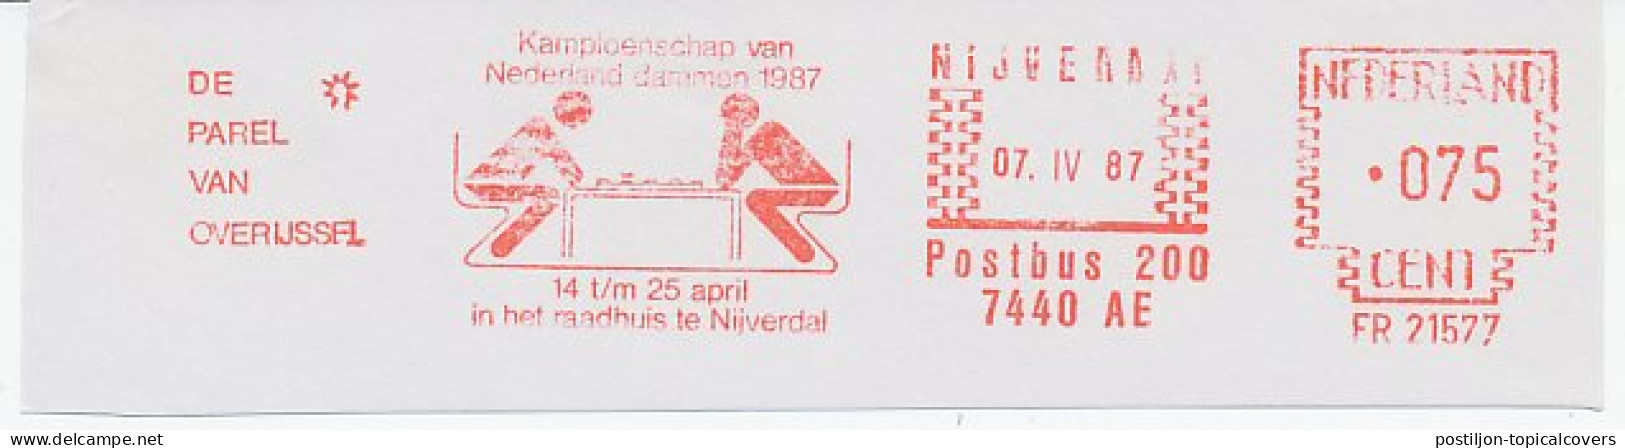 Meter Cut Netherlands 1987 Draughts - Dutch Championship 1987 - Sin Clasificación